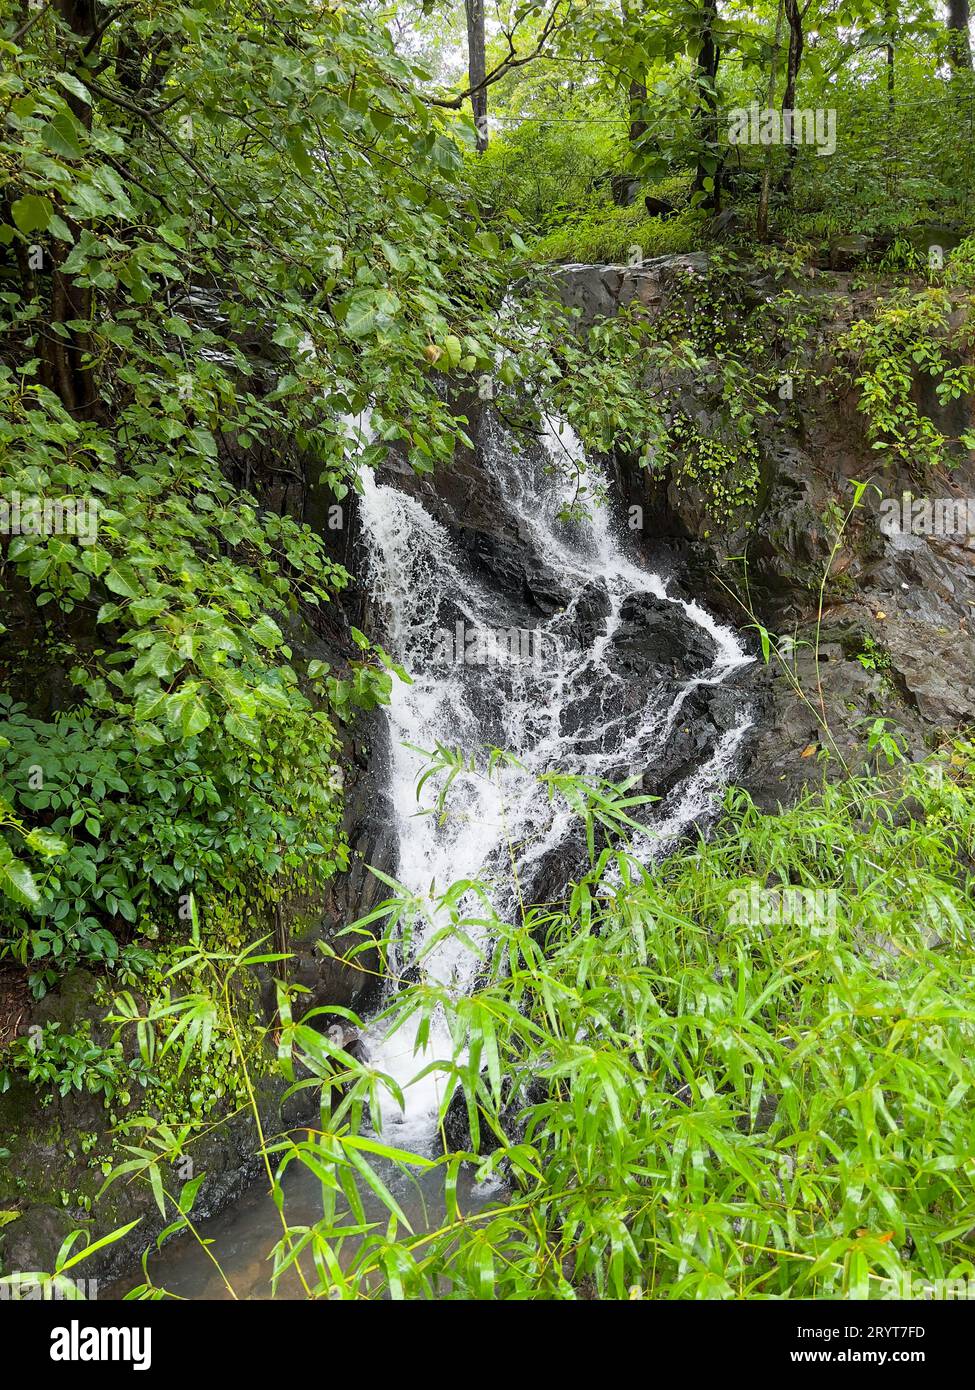 Hermosa pequeña cascada rodeada de exuberante vegetación verde durante la temporada del monzón. Foto de stock